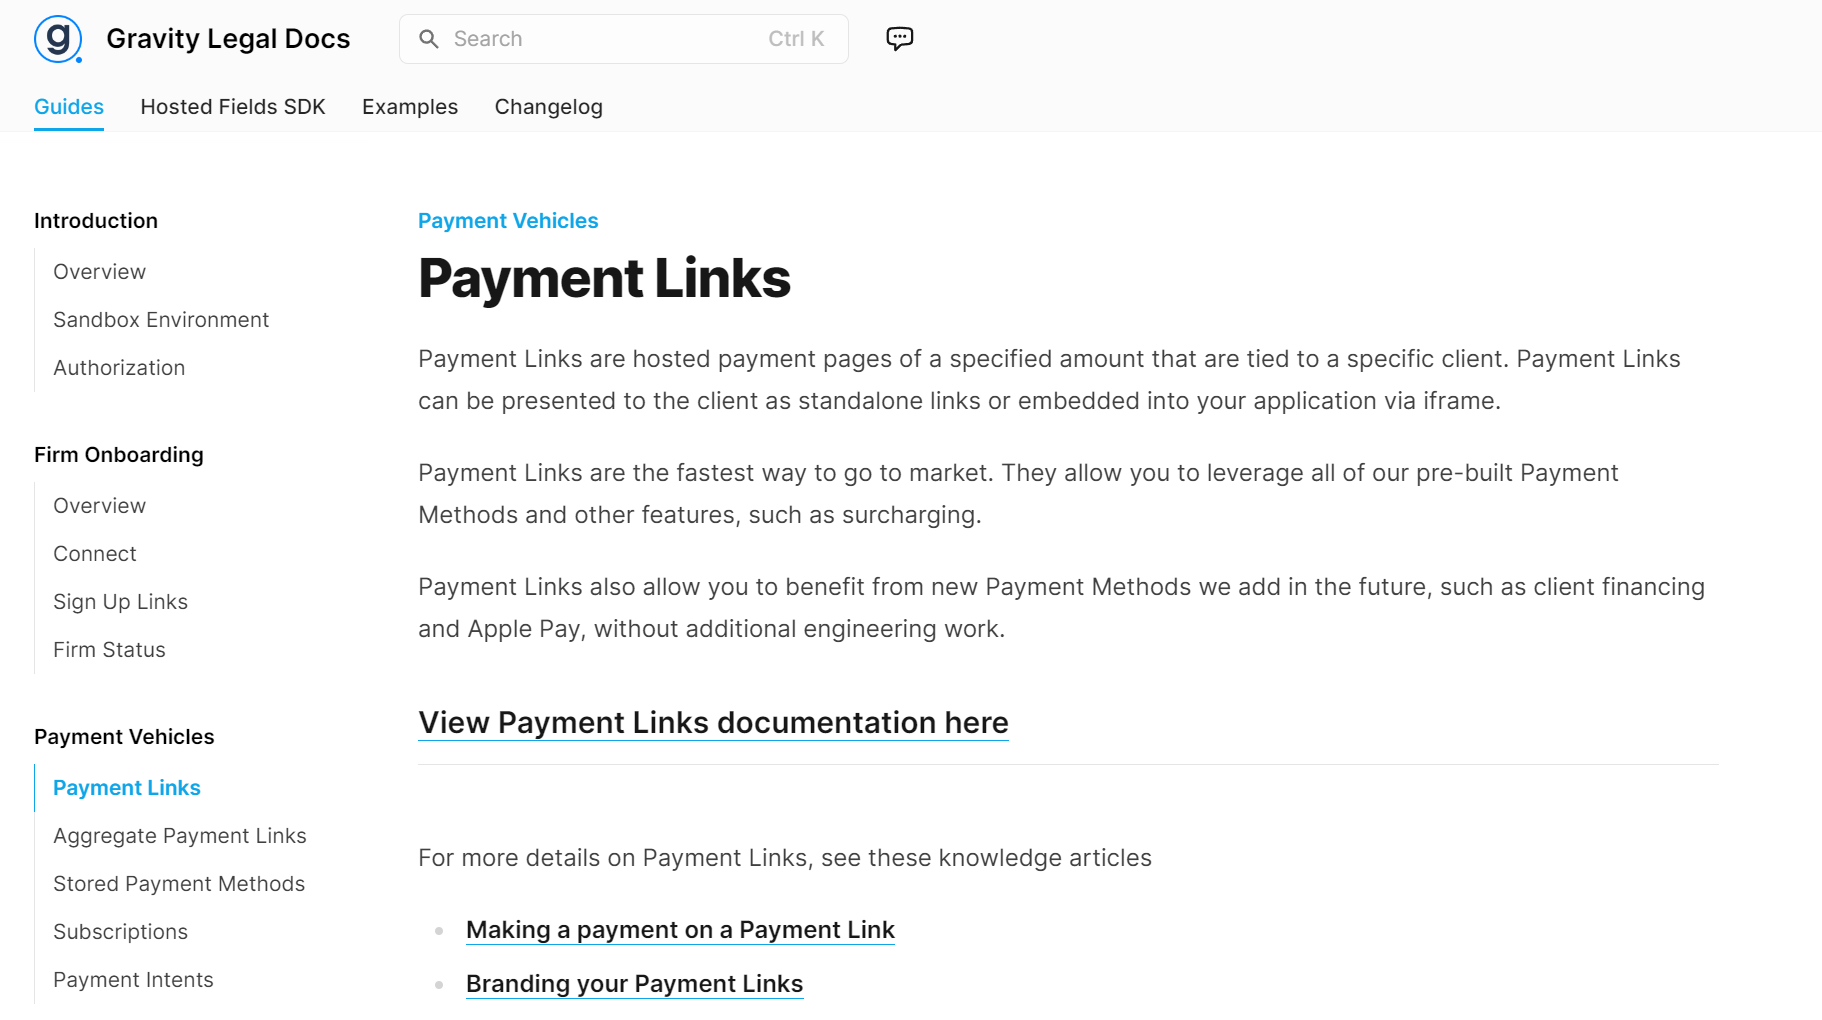 Payment Links Documentation